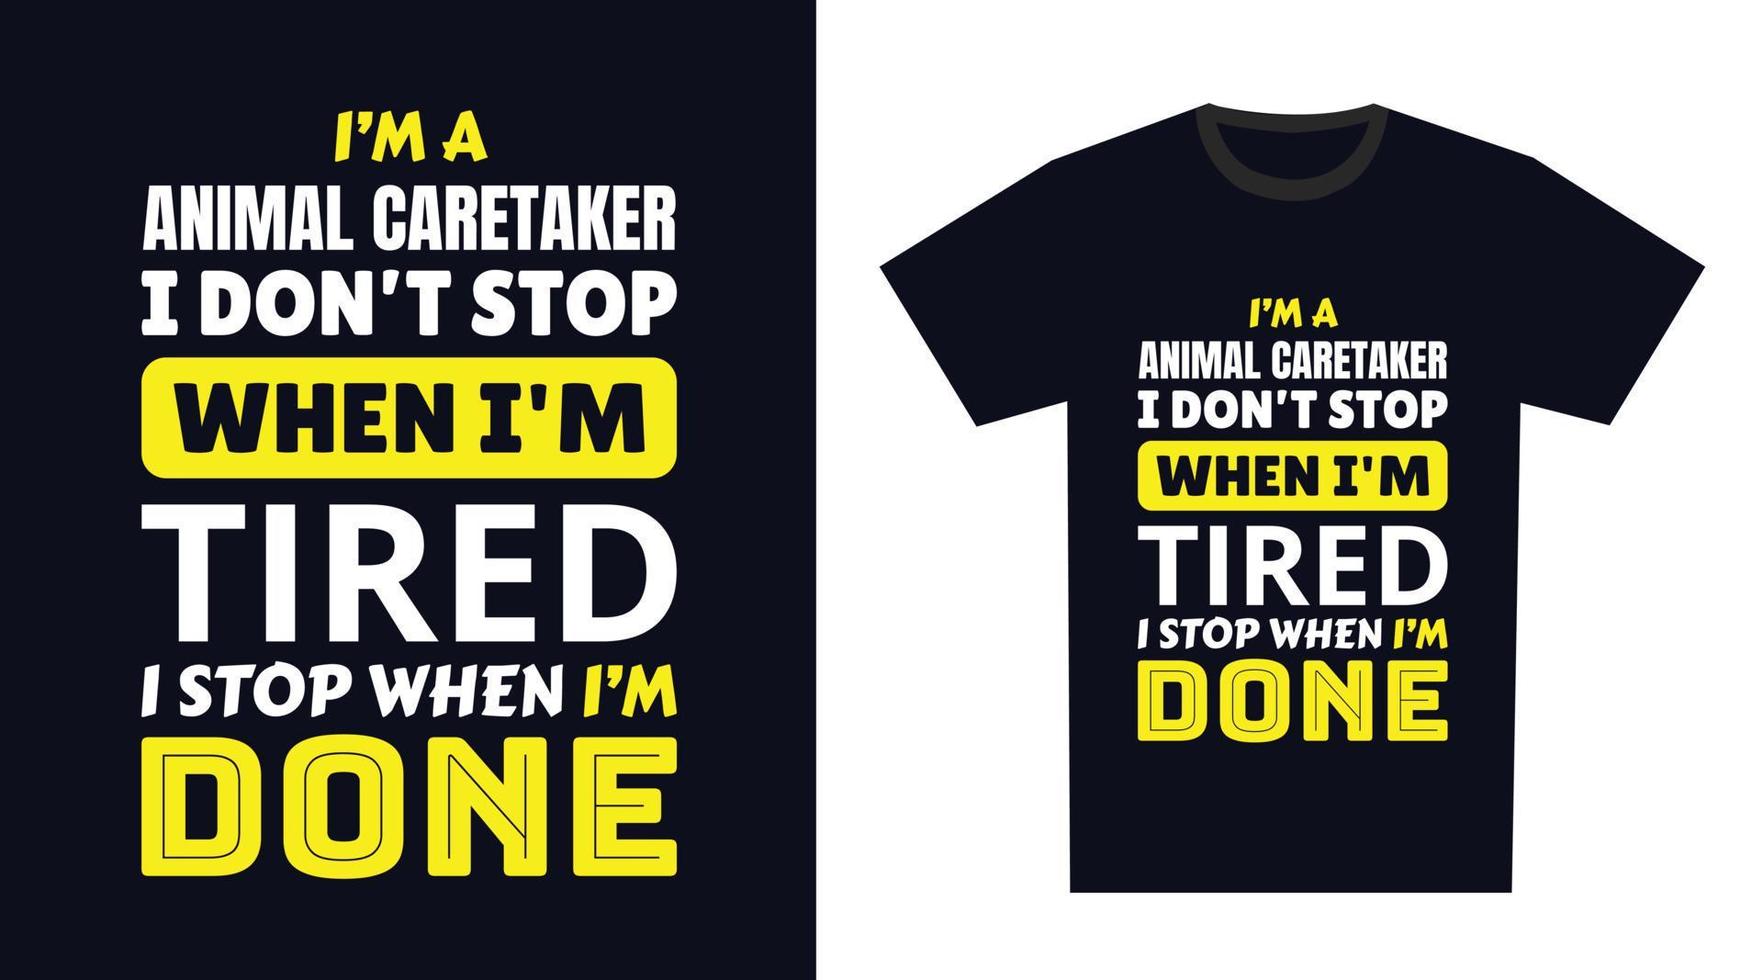 Animal caretaker T Shirt Design. I 'm a Animal caretaker I Don't Stop When I'm Tired, I Stop When I'm Done vector